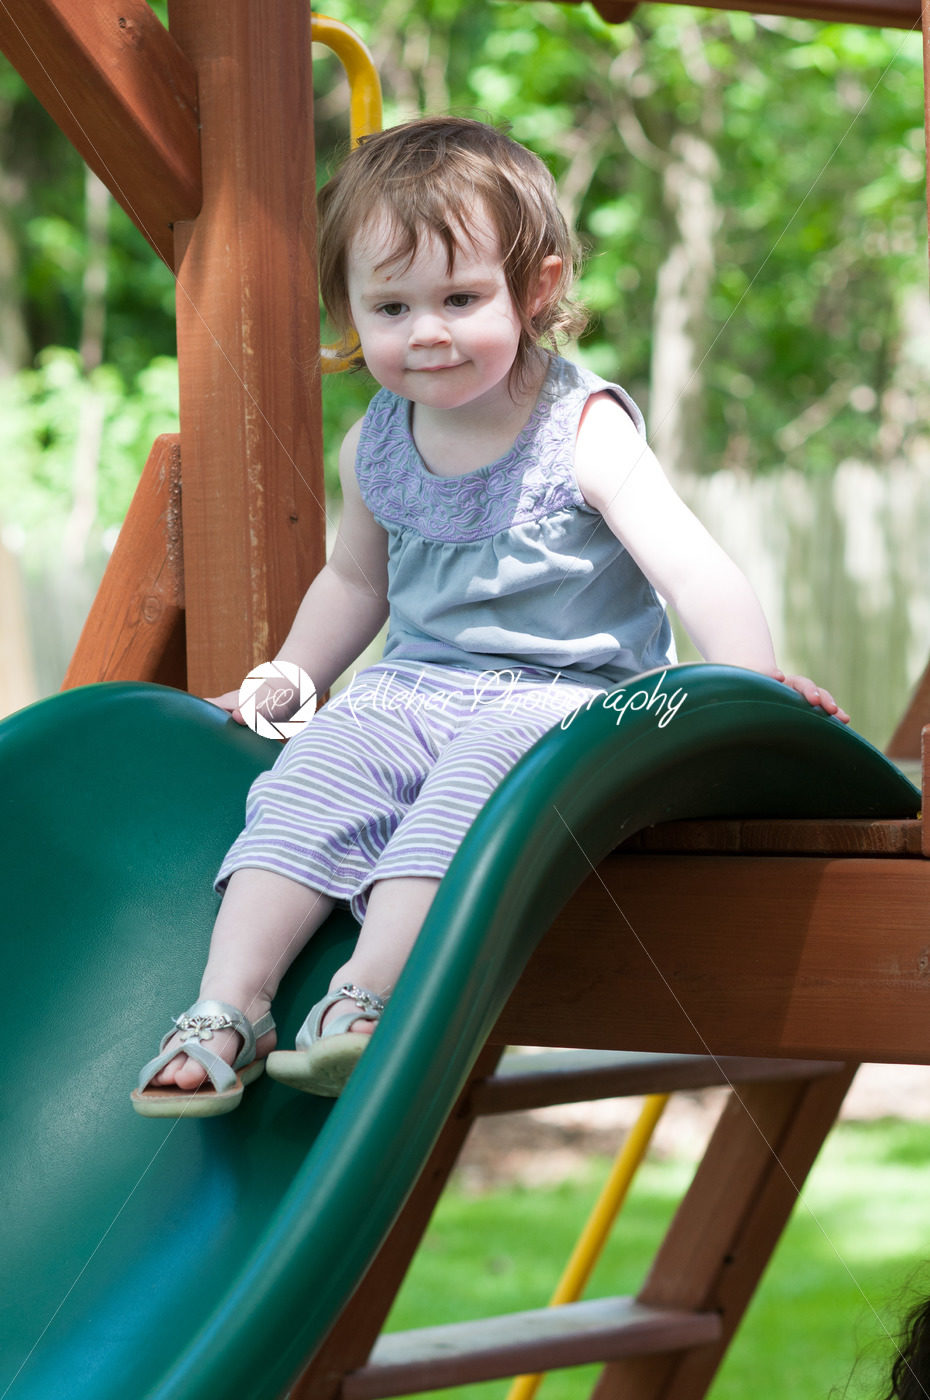 Girl riding on childrens slides on playground - Kelleher Photography Store